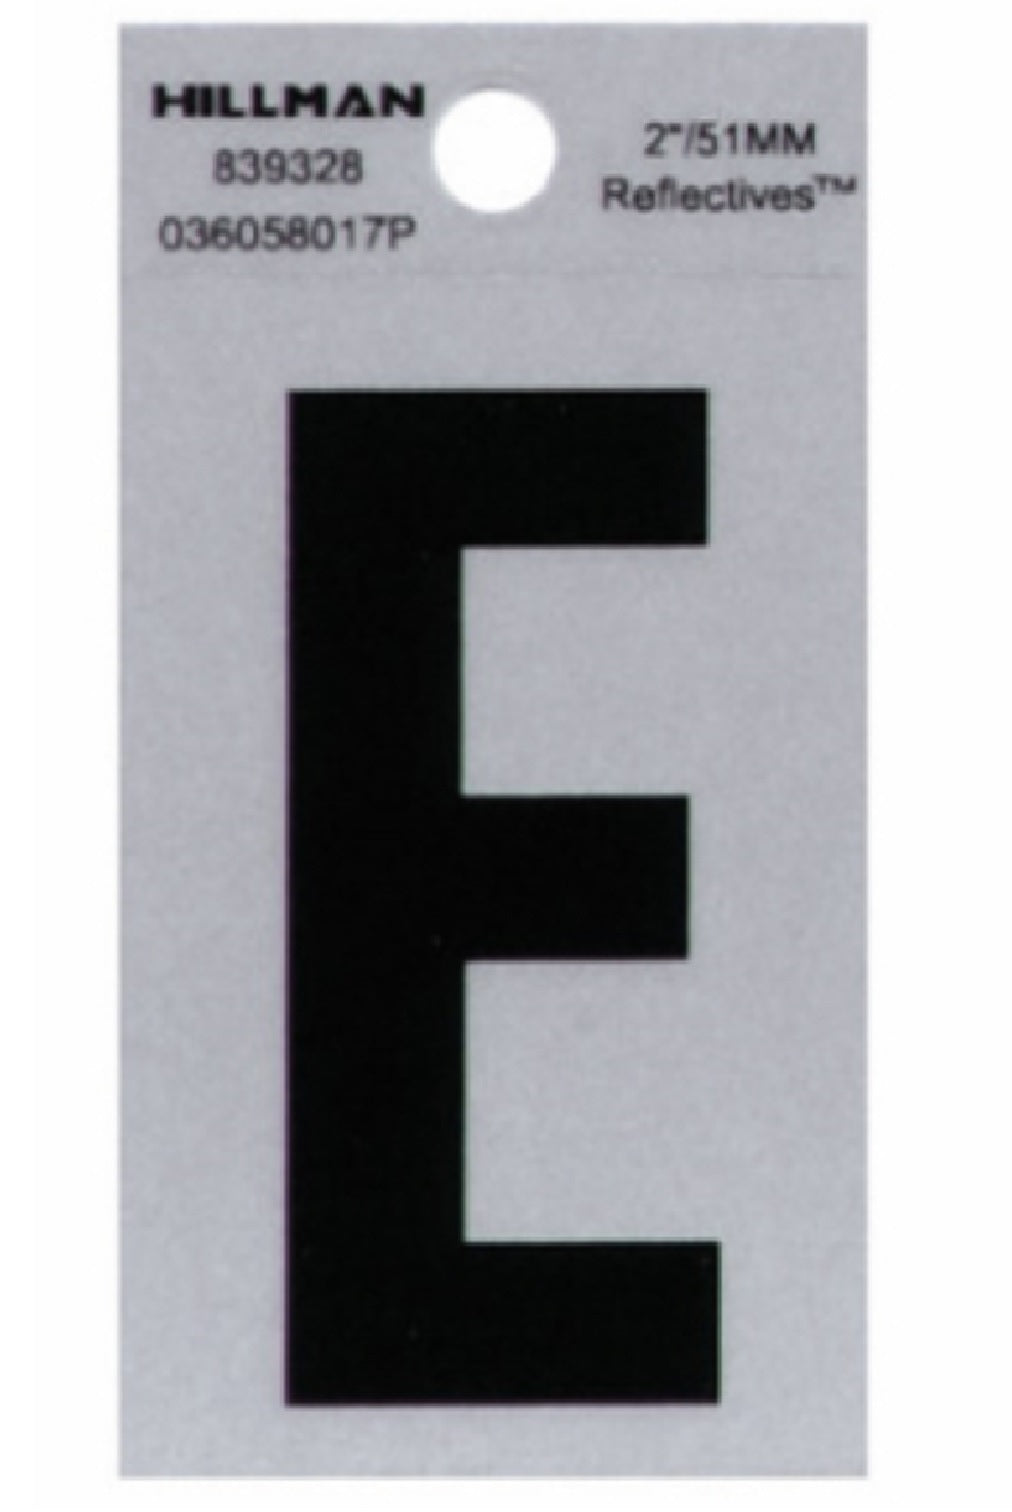 Hillman Fasteners 839328 Adhesive Reflective Vinyl Letter E, 2 Inch